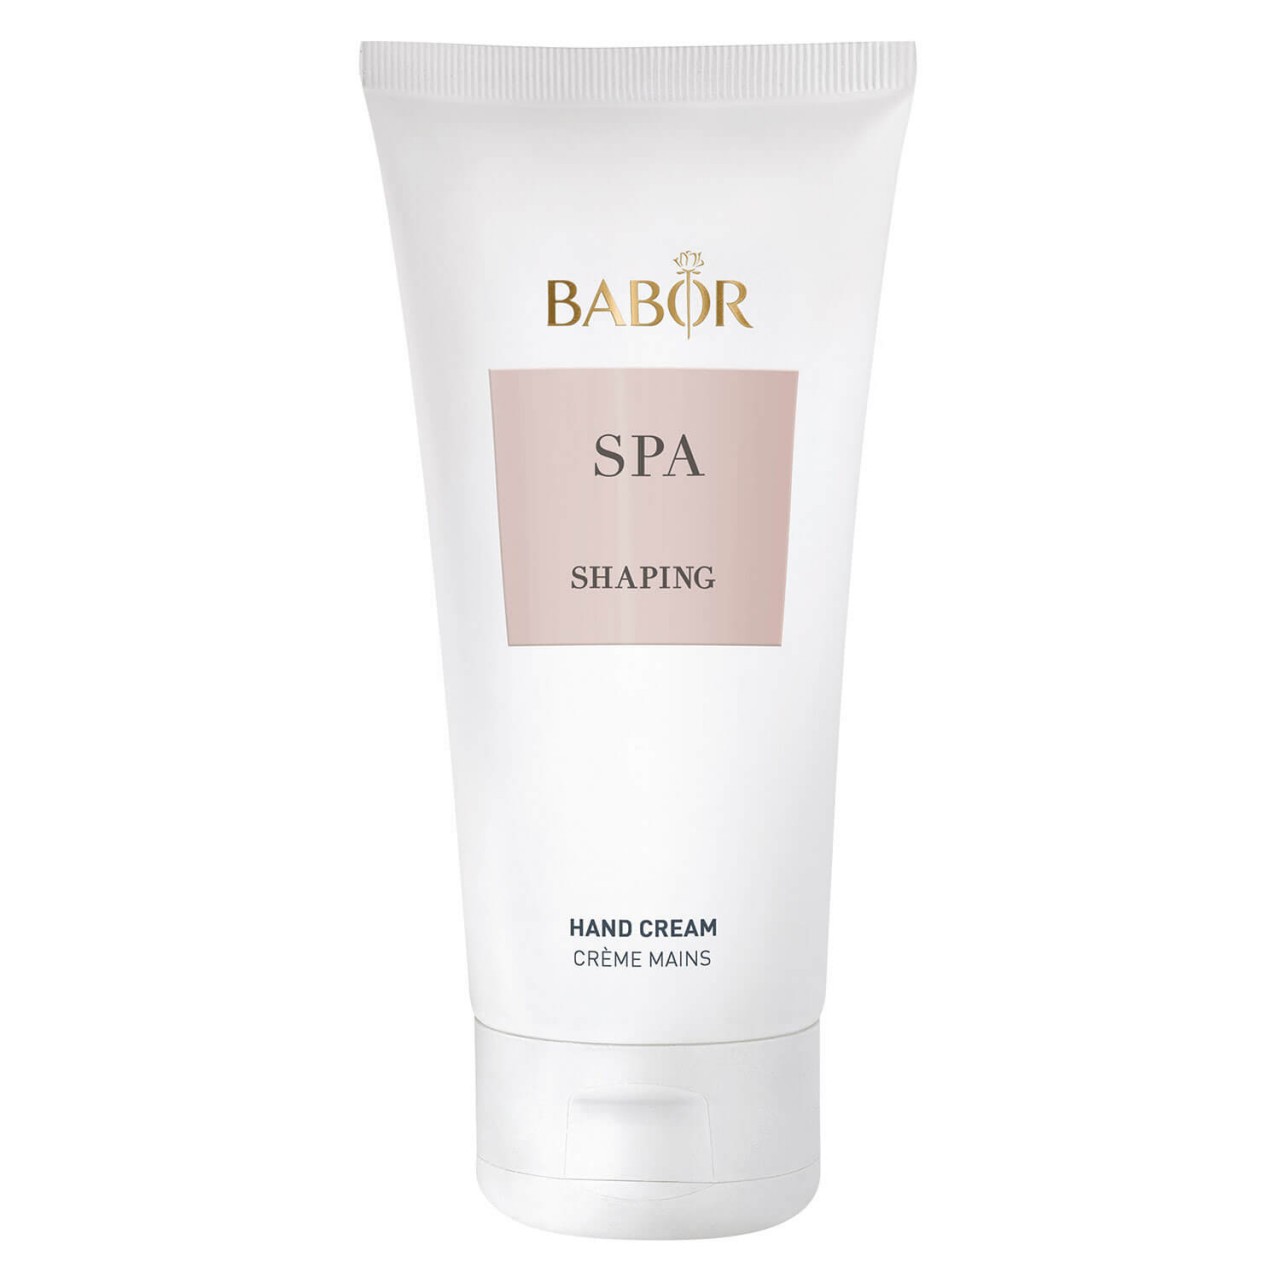 BABOR SPA - Shaping Hand Cream von BABOR